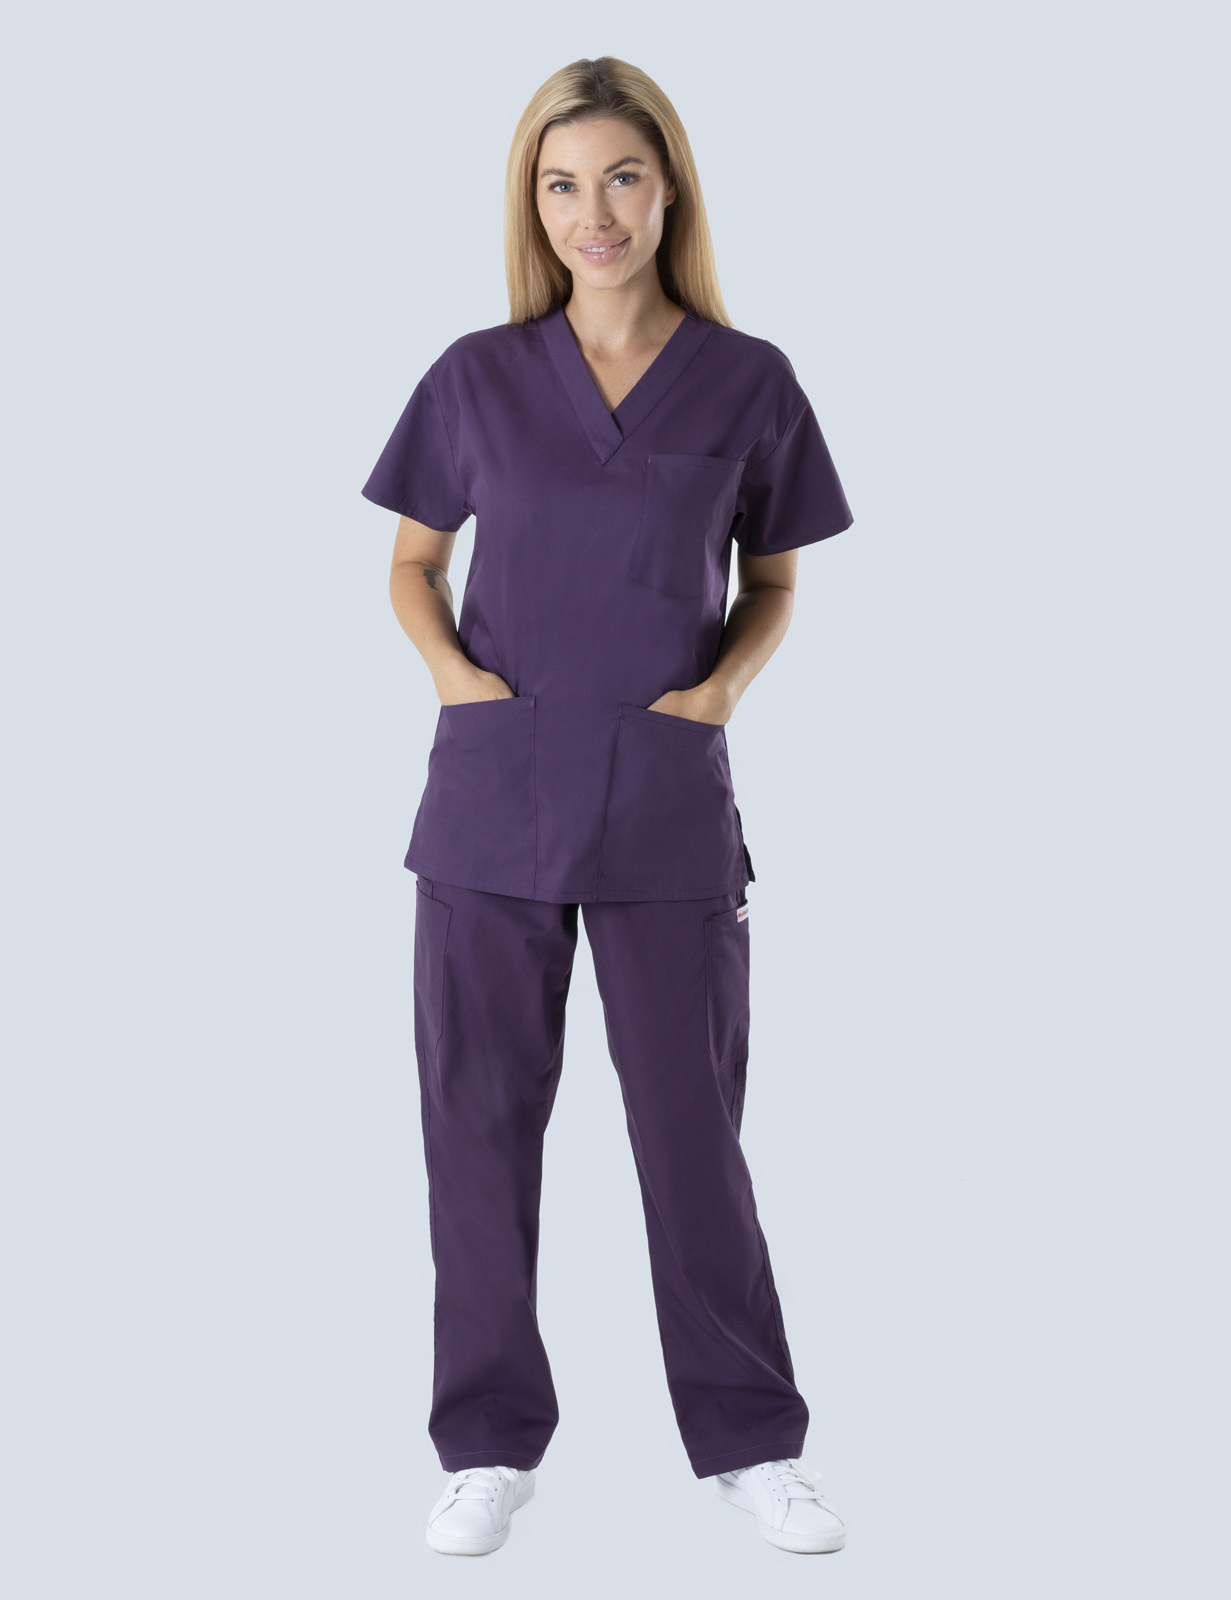 Kilcoy Hospital - Clinical Nurse (4 Pocket Scrub Top and Cargo Pants in Aubergine incl Logos)